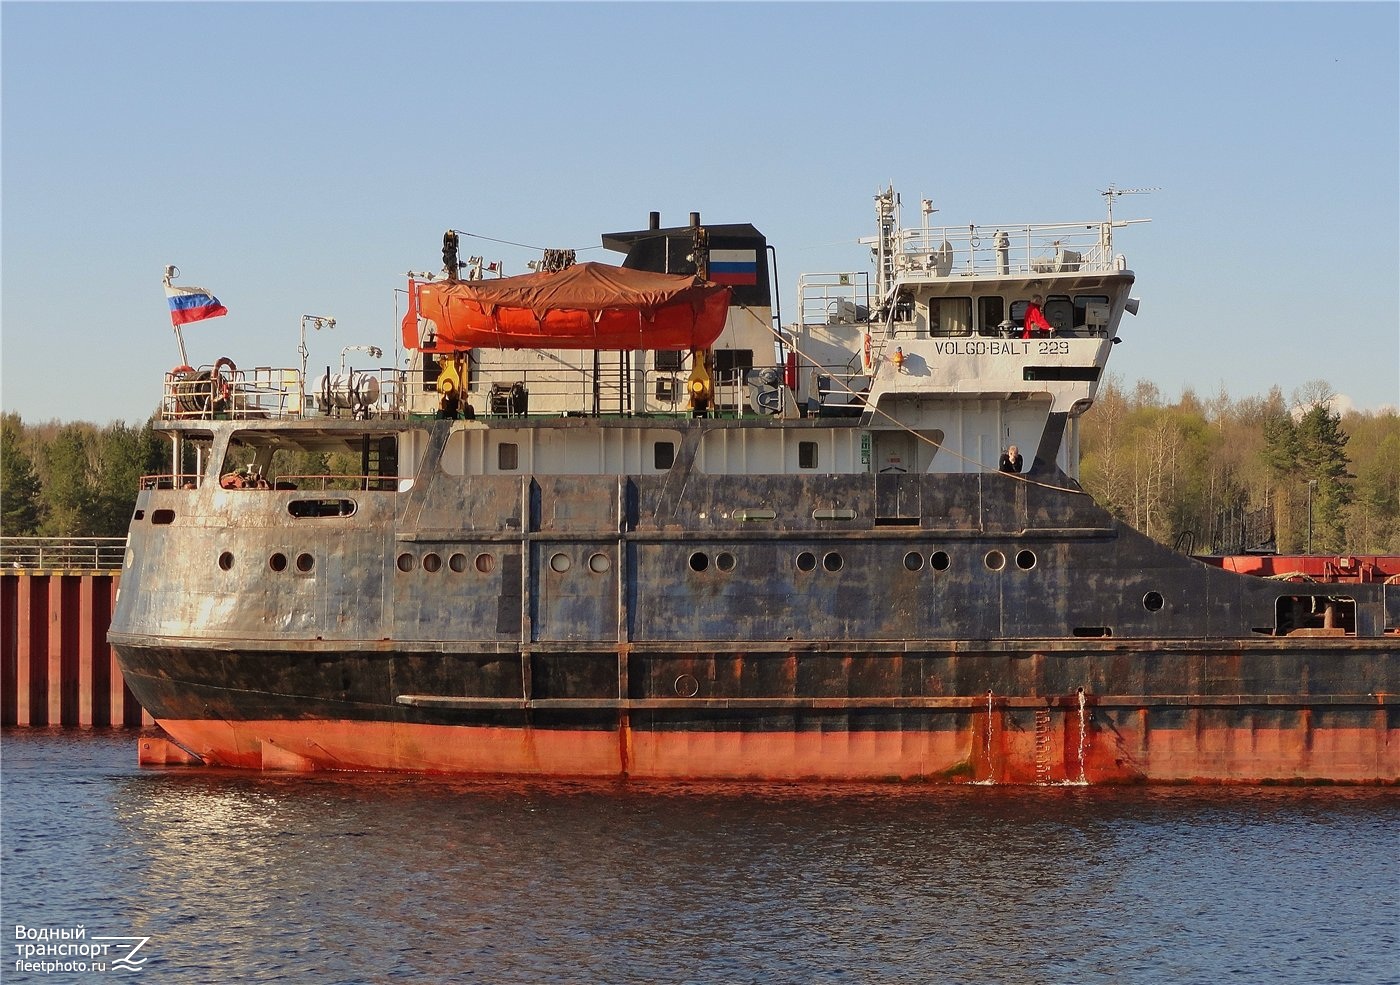 Волго-Балт 229. Vessel superstructures